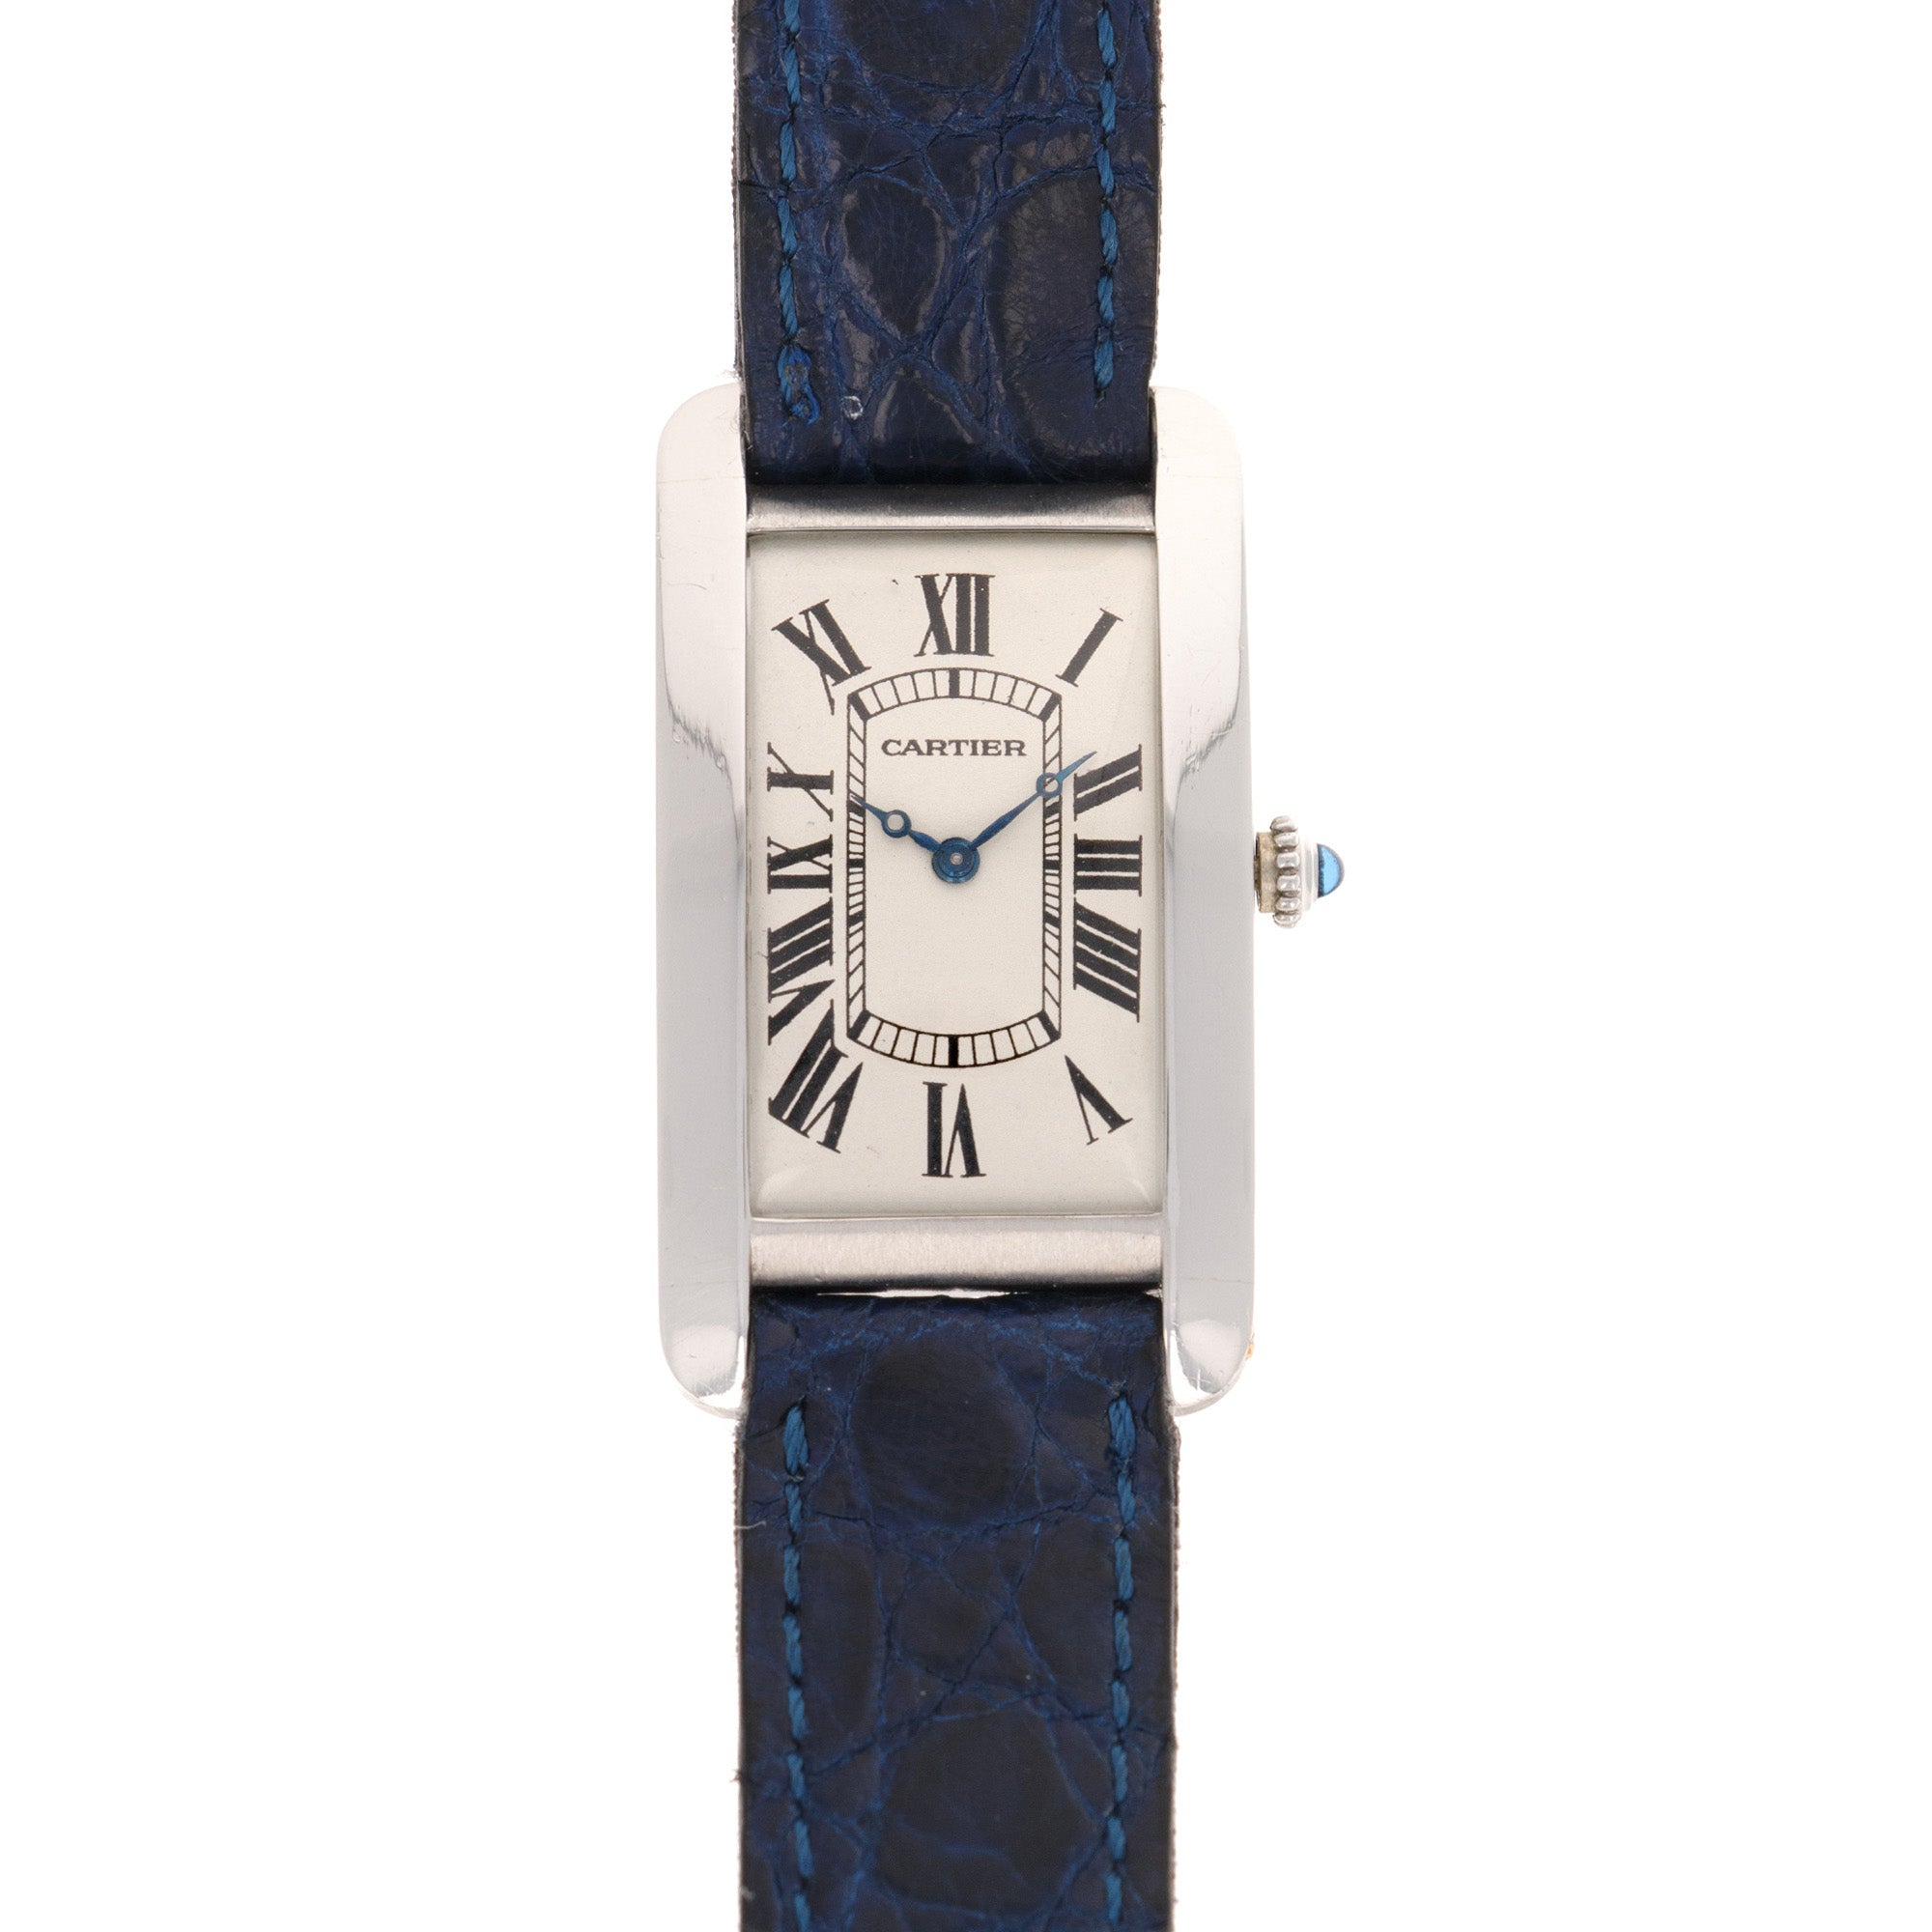 Cartier - Cartier Platinum Tank Cintree Medium Watch, 1920s - The Keystone Watches